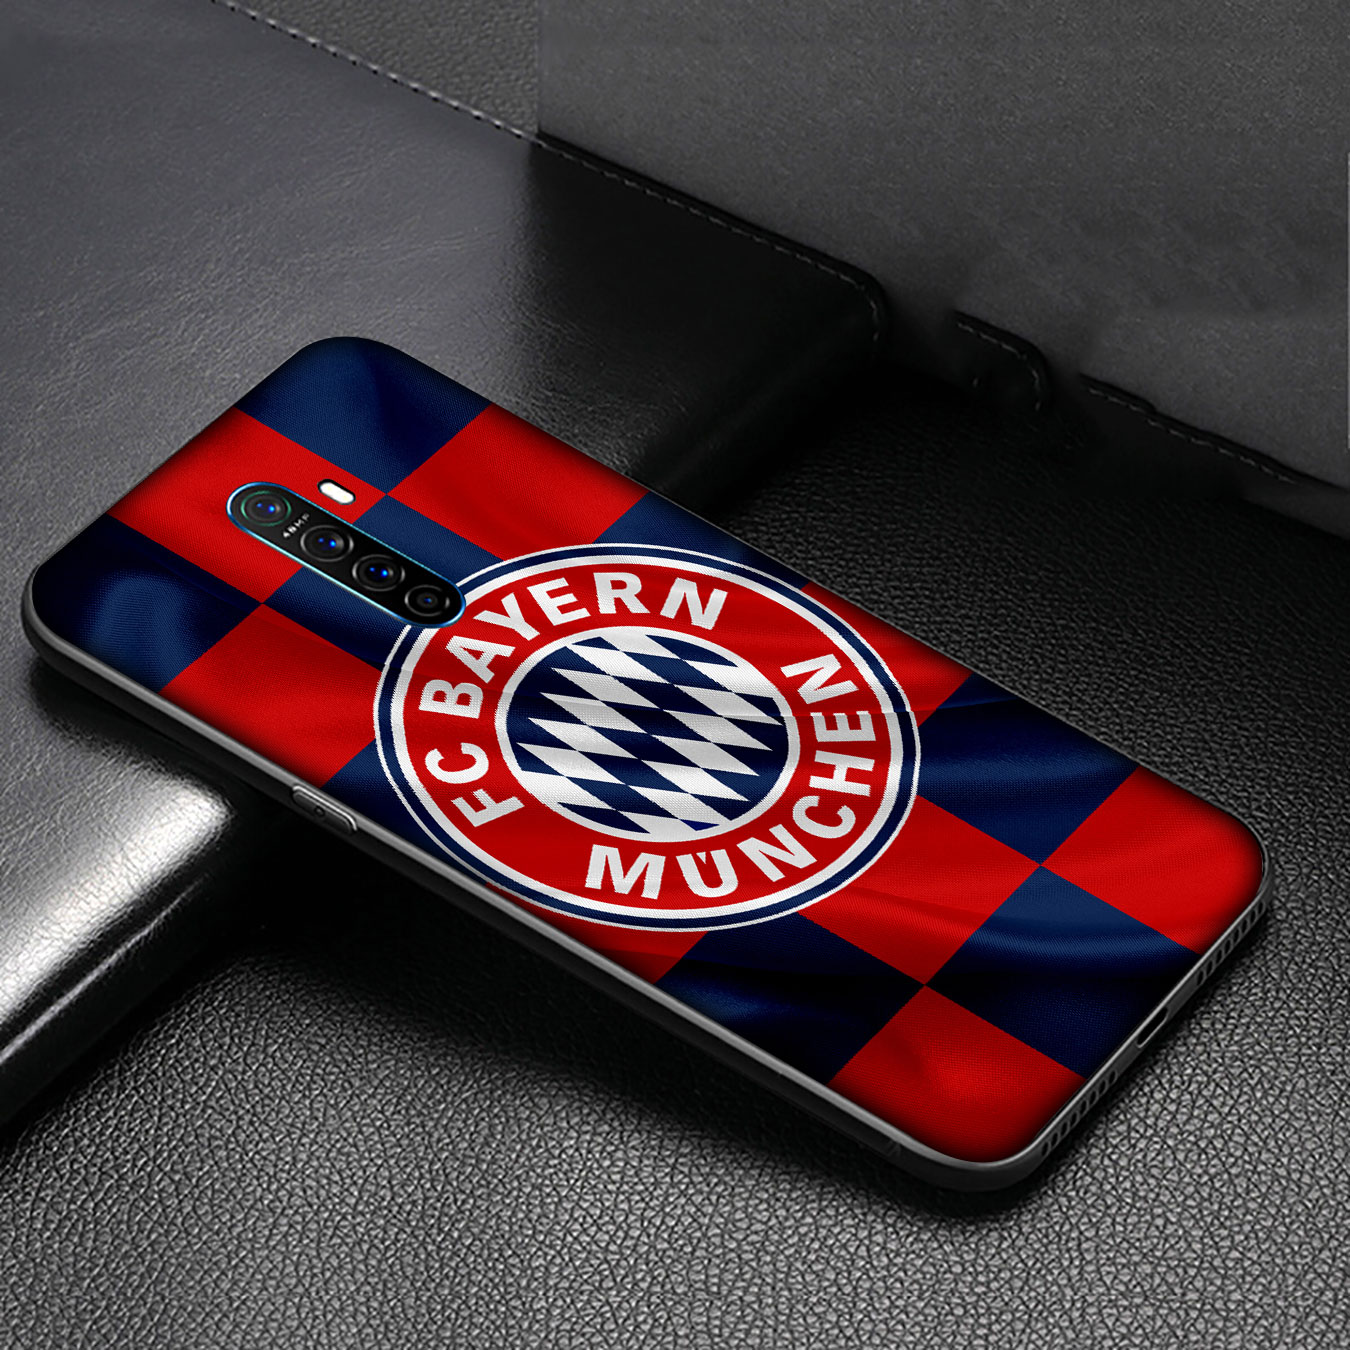 Ốp điện thoại silicon mềm hình FC Bayern Munich cho Samsung Galaxy S21 Ultra S8 Plus M31 M51 A11 A31 A51 S21+ S8+ S21+